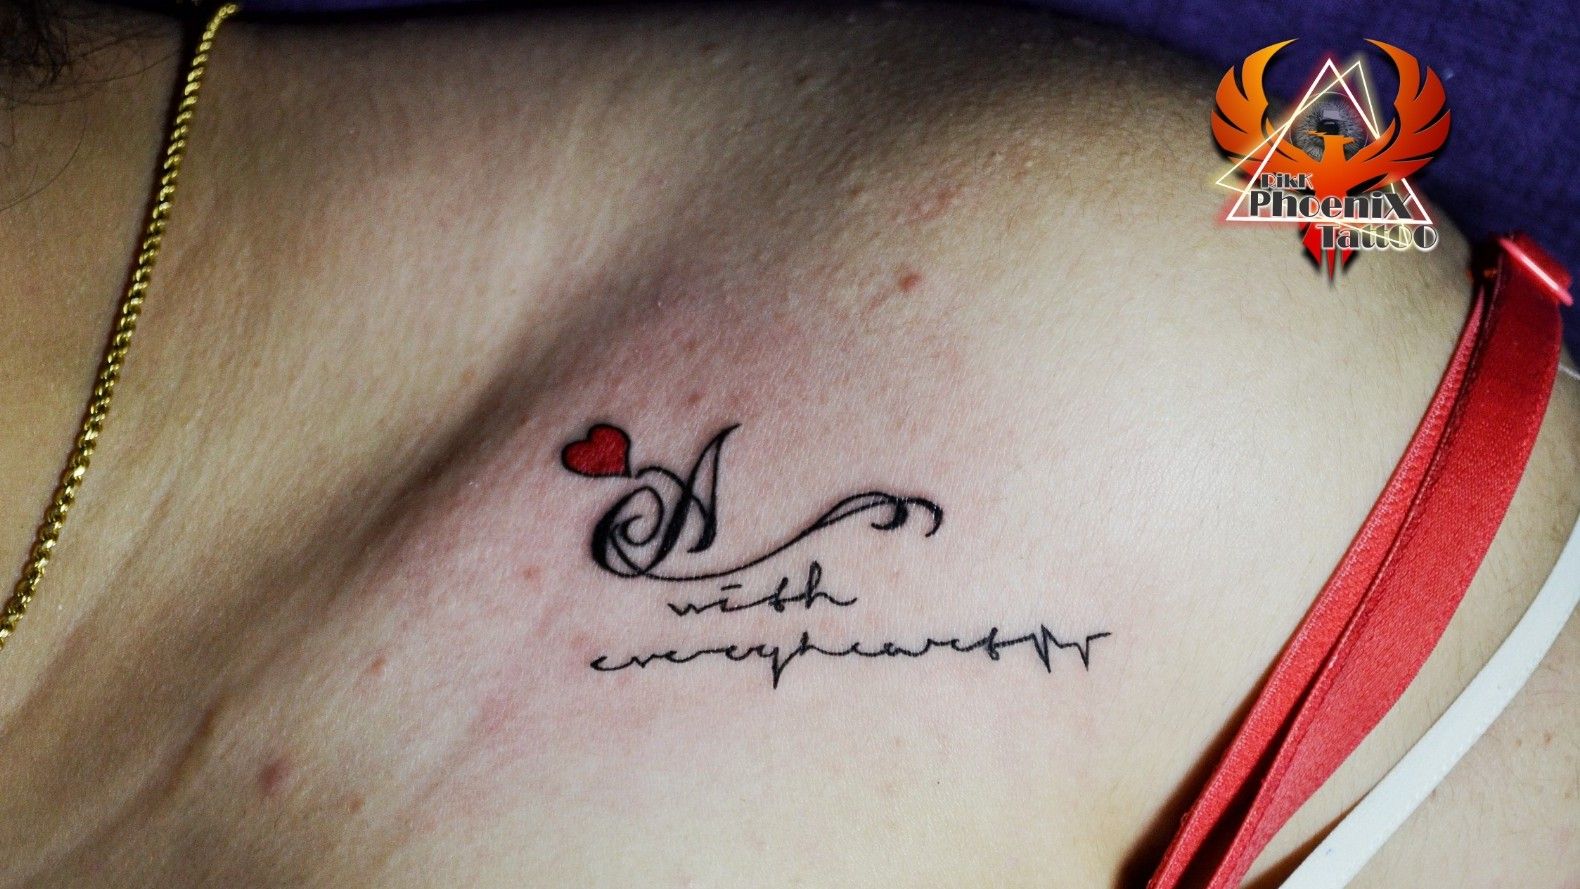 Heartbeat tattoo design ideas!... - InksTambay Tattoo in DXB | Facebook